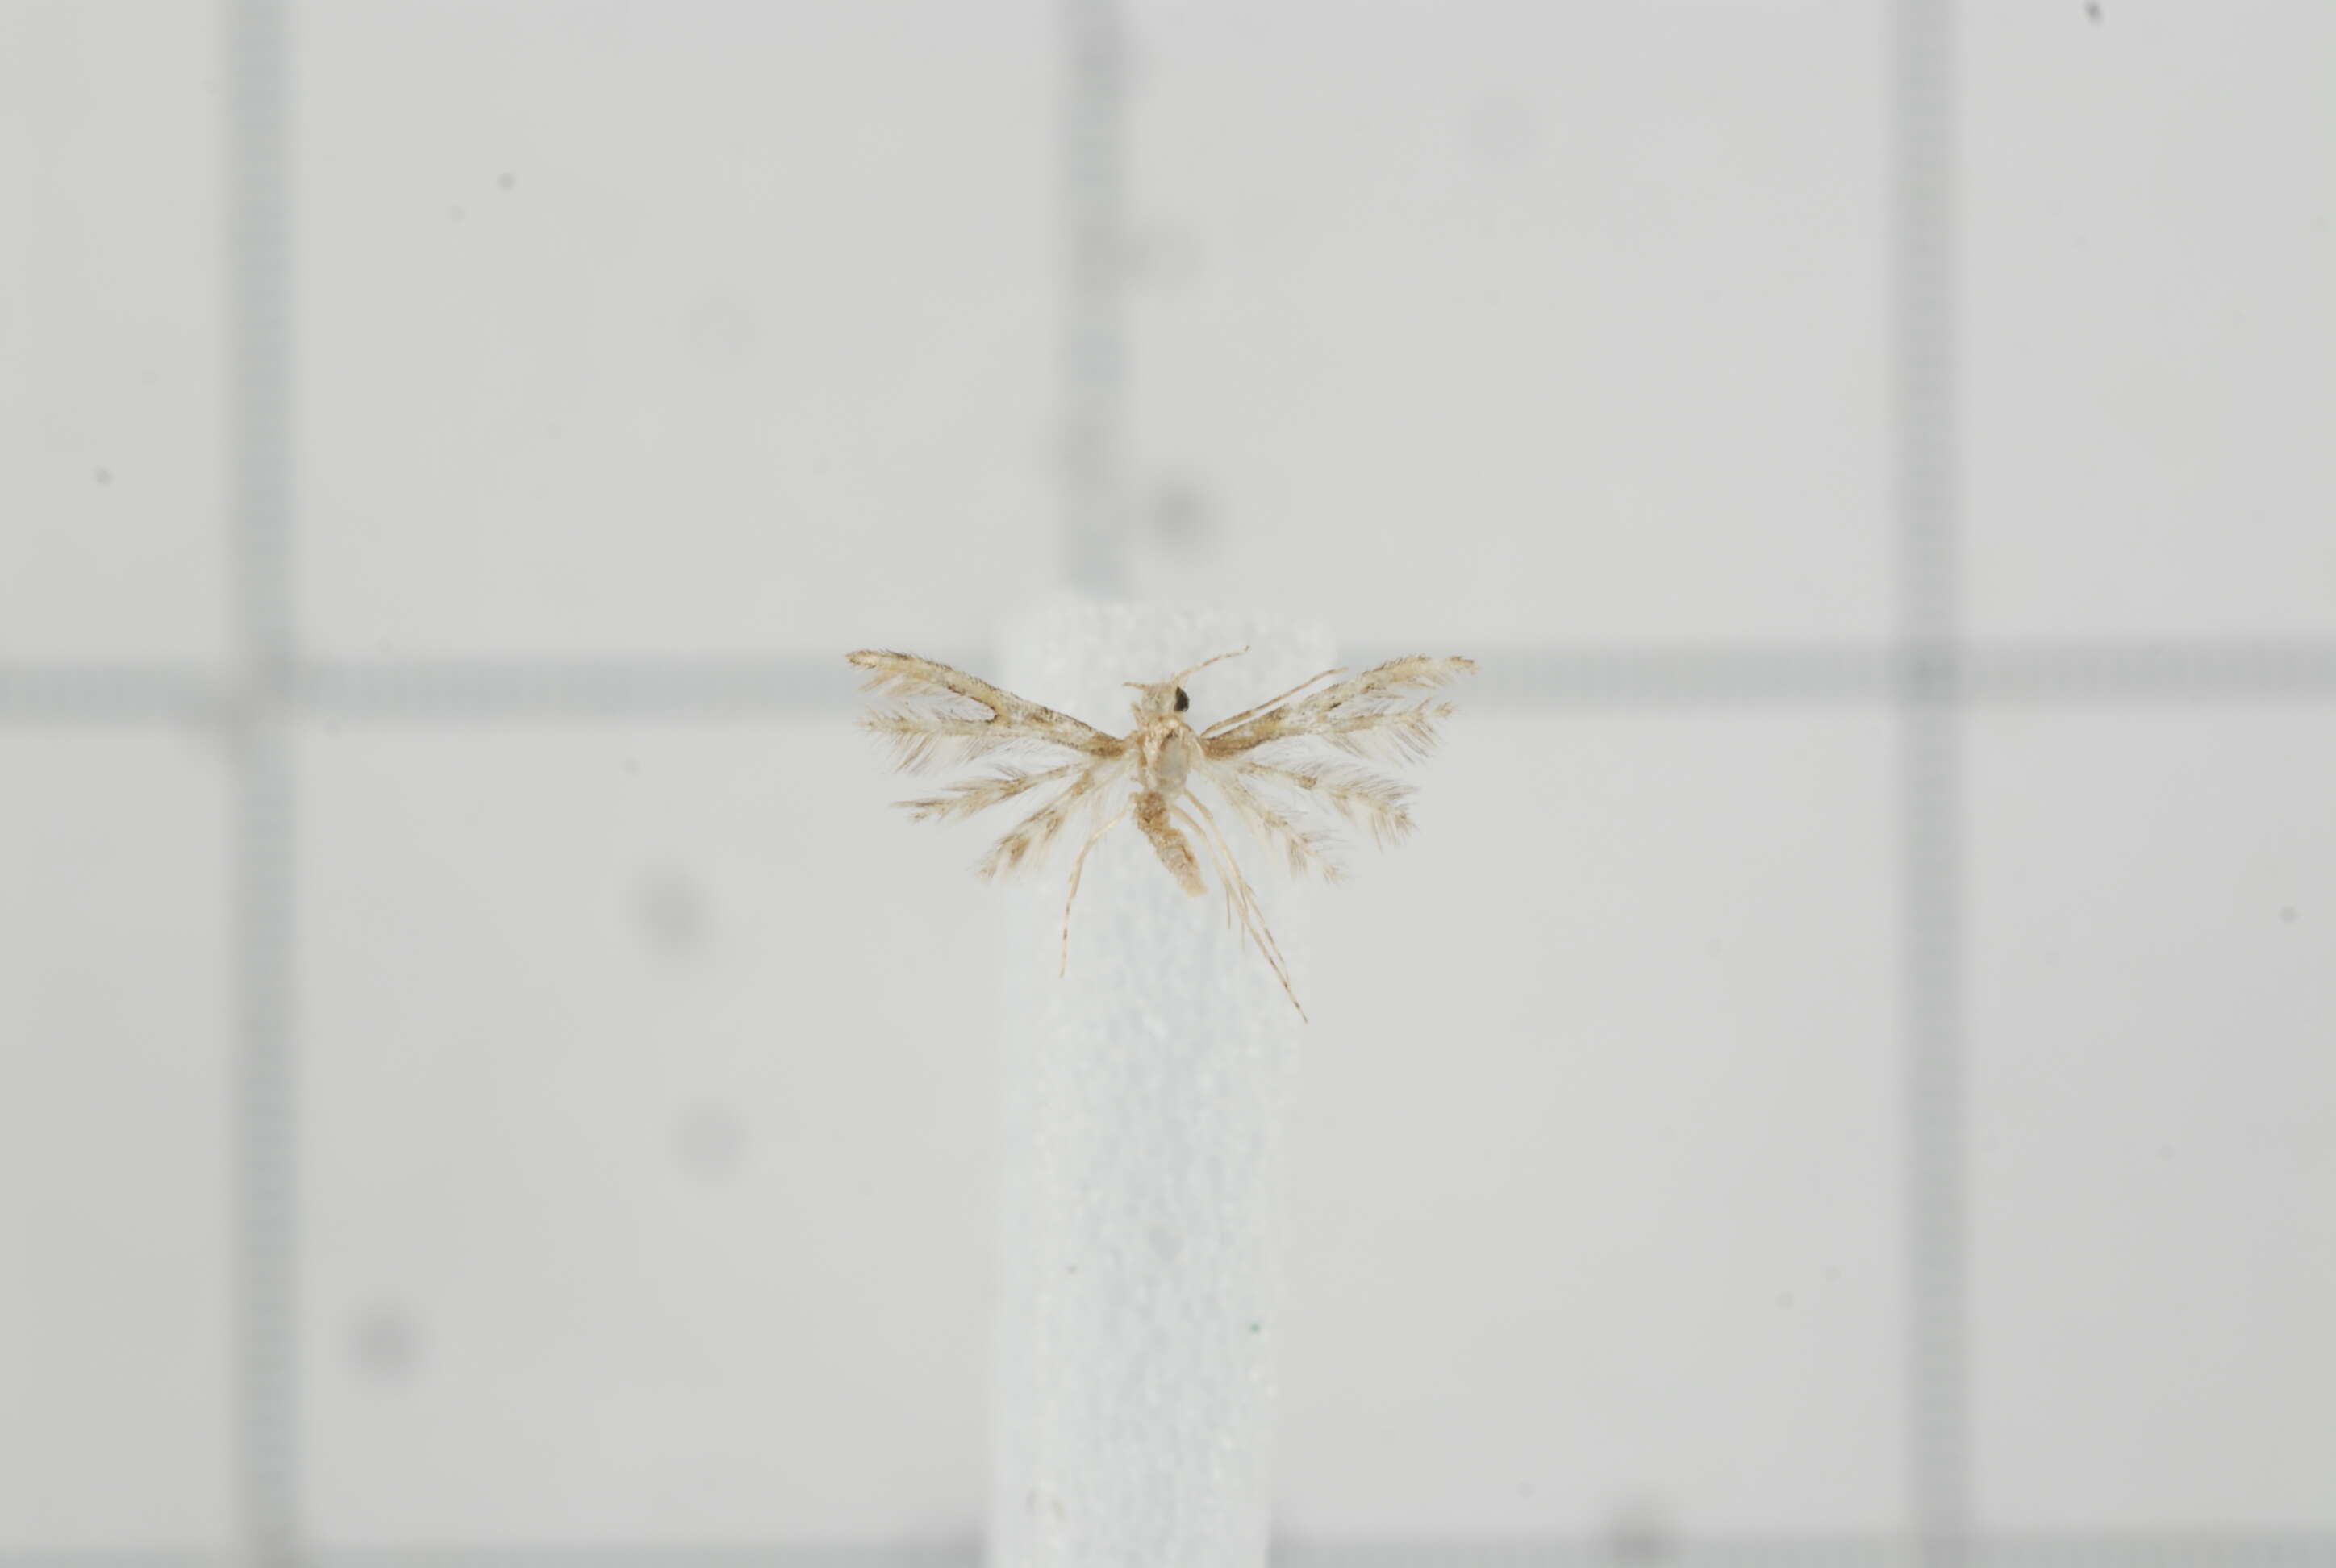 Image de Tineodidae